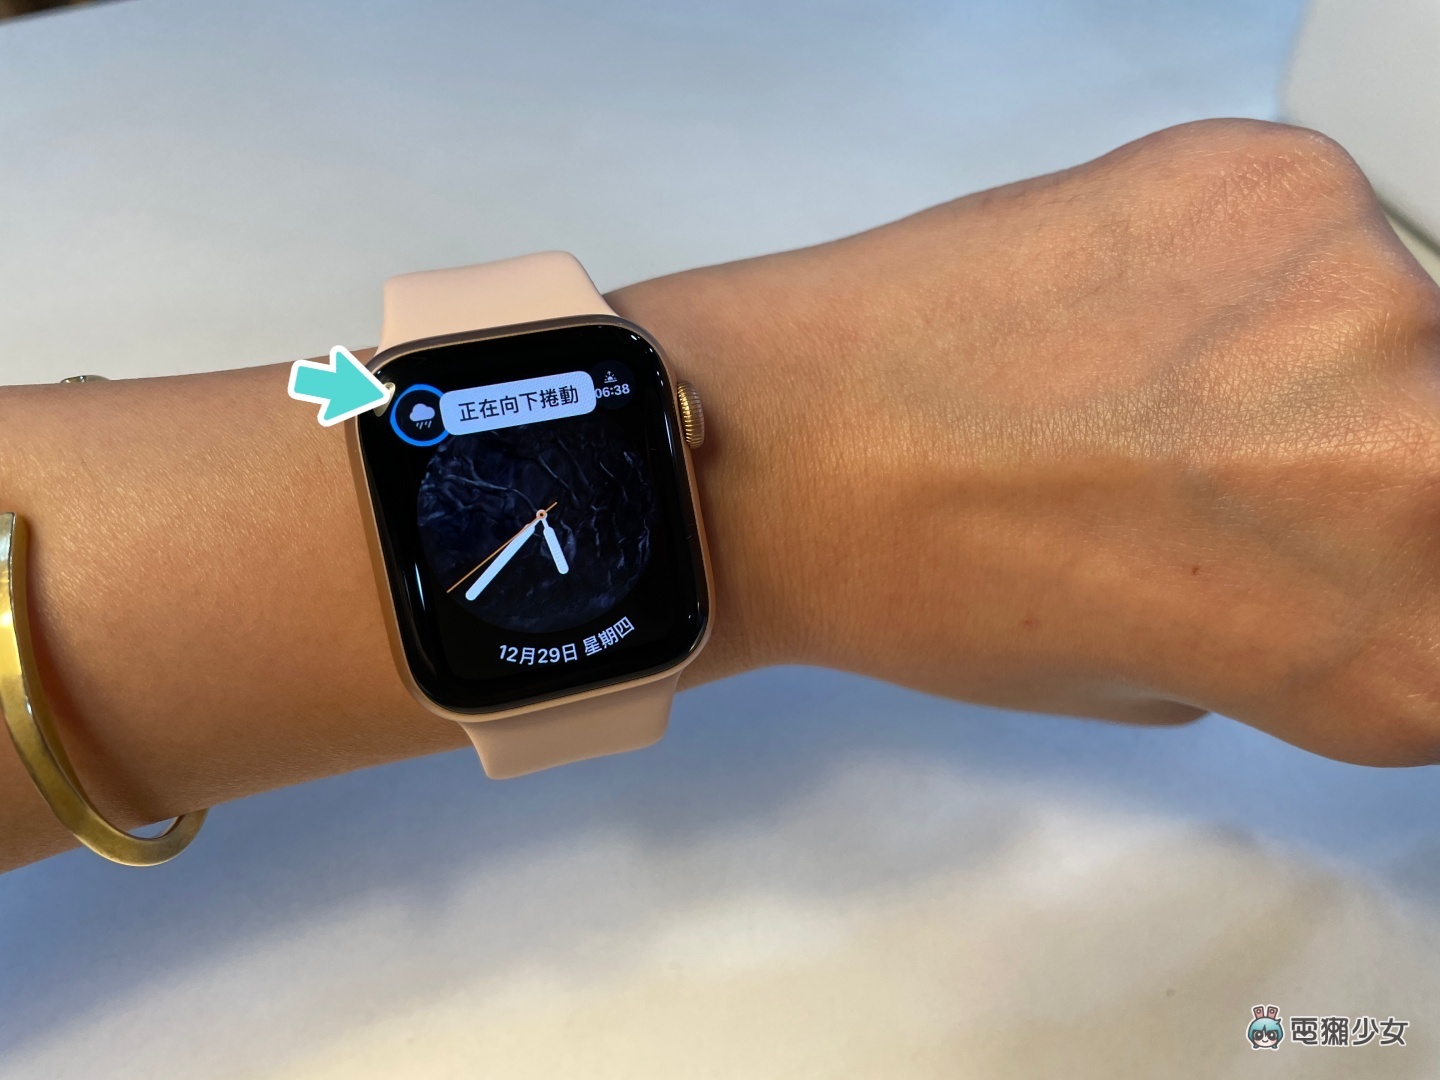 Apple Watch 跳出『 捏兩下 』到底要捏哪？原來捏捏手指就能單手開啟 Apple Pay？